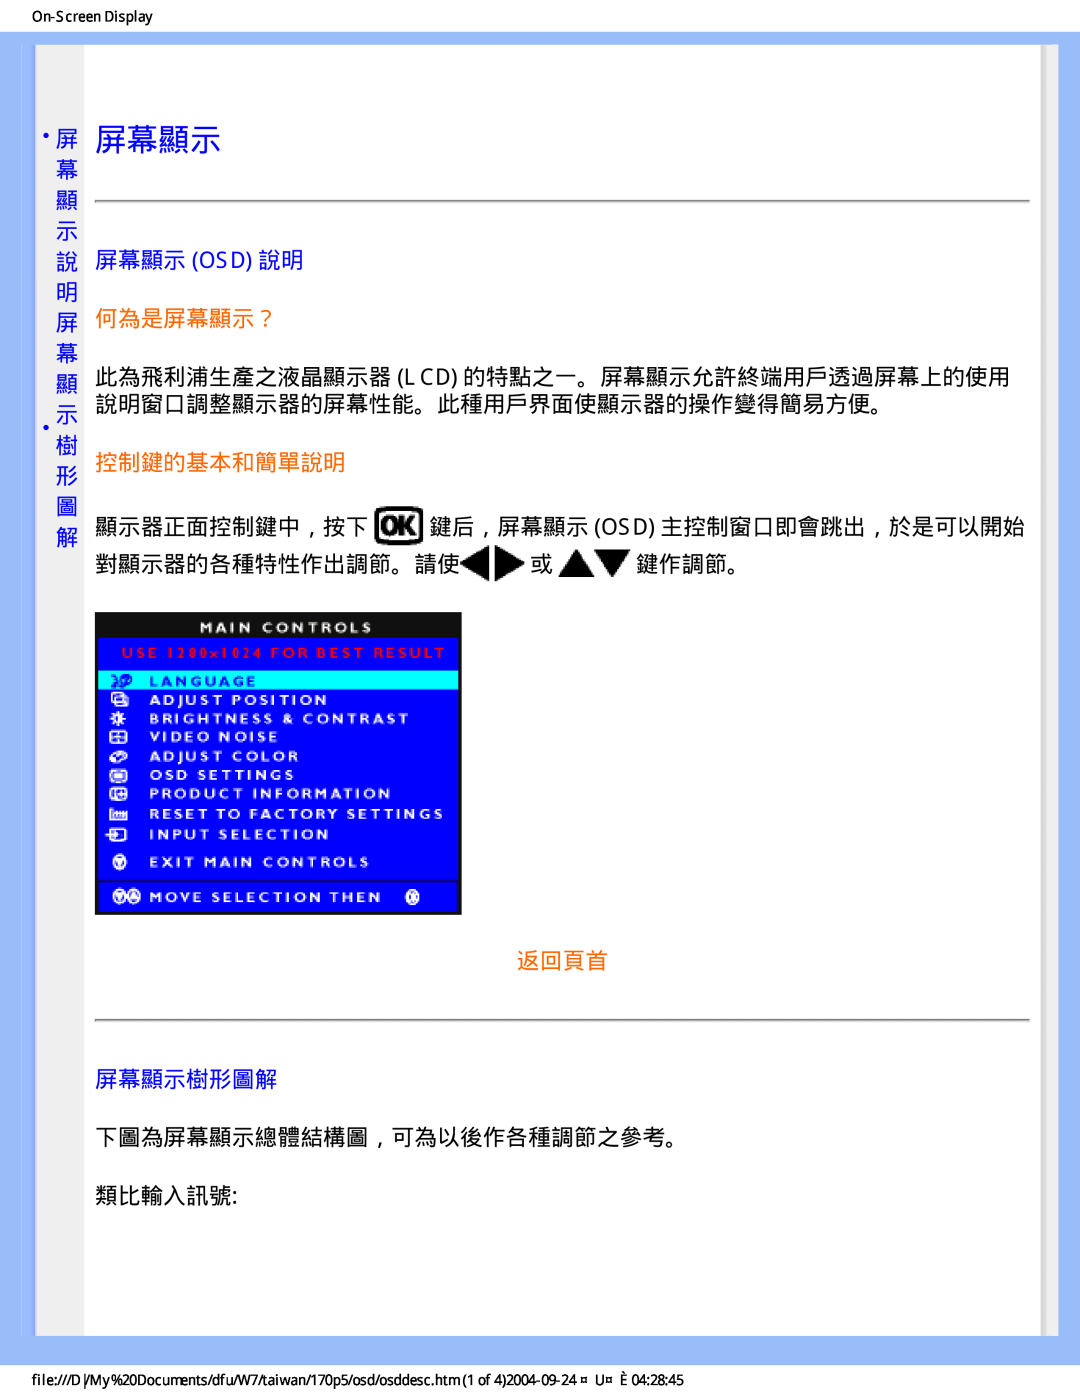 Philips 170p5 user manual •屏 屏幕顯示, 屏 何為是屏幕顯示？, 控制鍵的基本和簡單說明, 返回頁首 